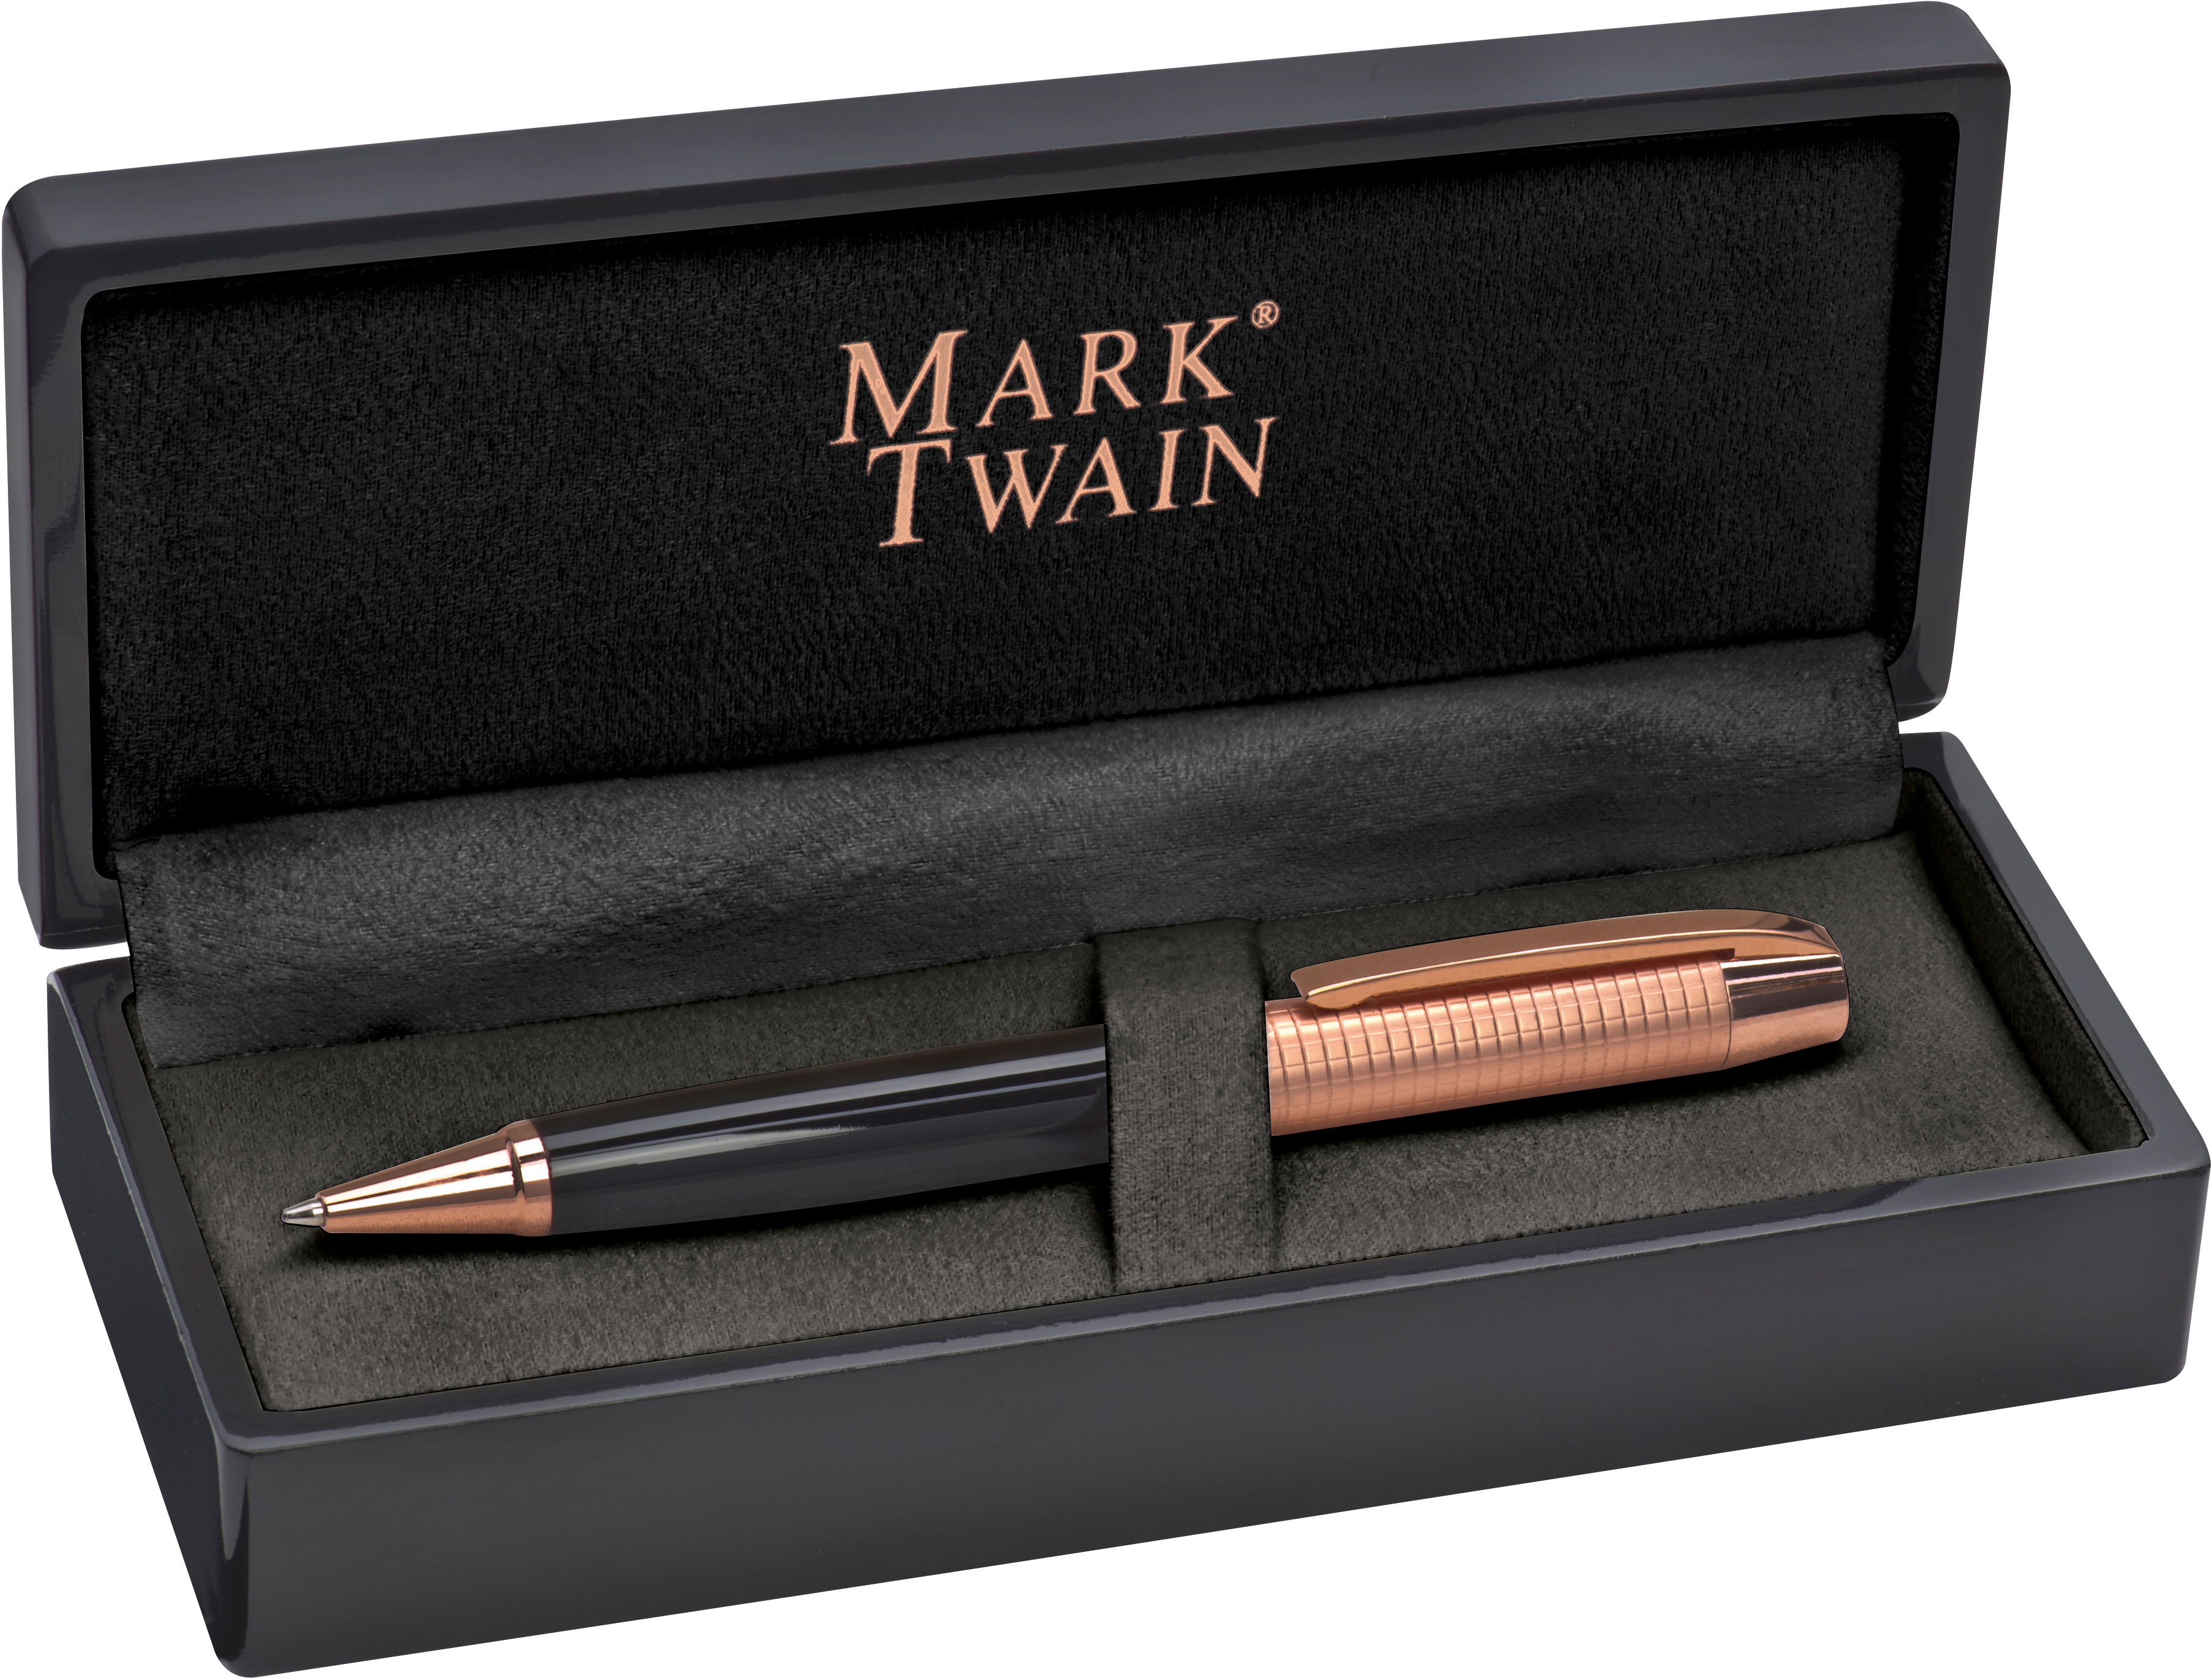 Шариковая ручка в футляре. Montblanc Mark Twain ручка. Футляр для ручек. Ручка в футляре 21241-1-2-3-4-5-6. Надпись на футляре для ручки.